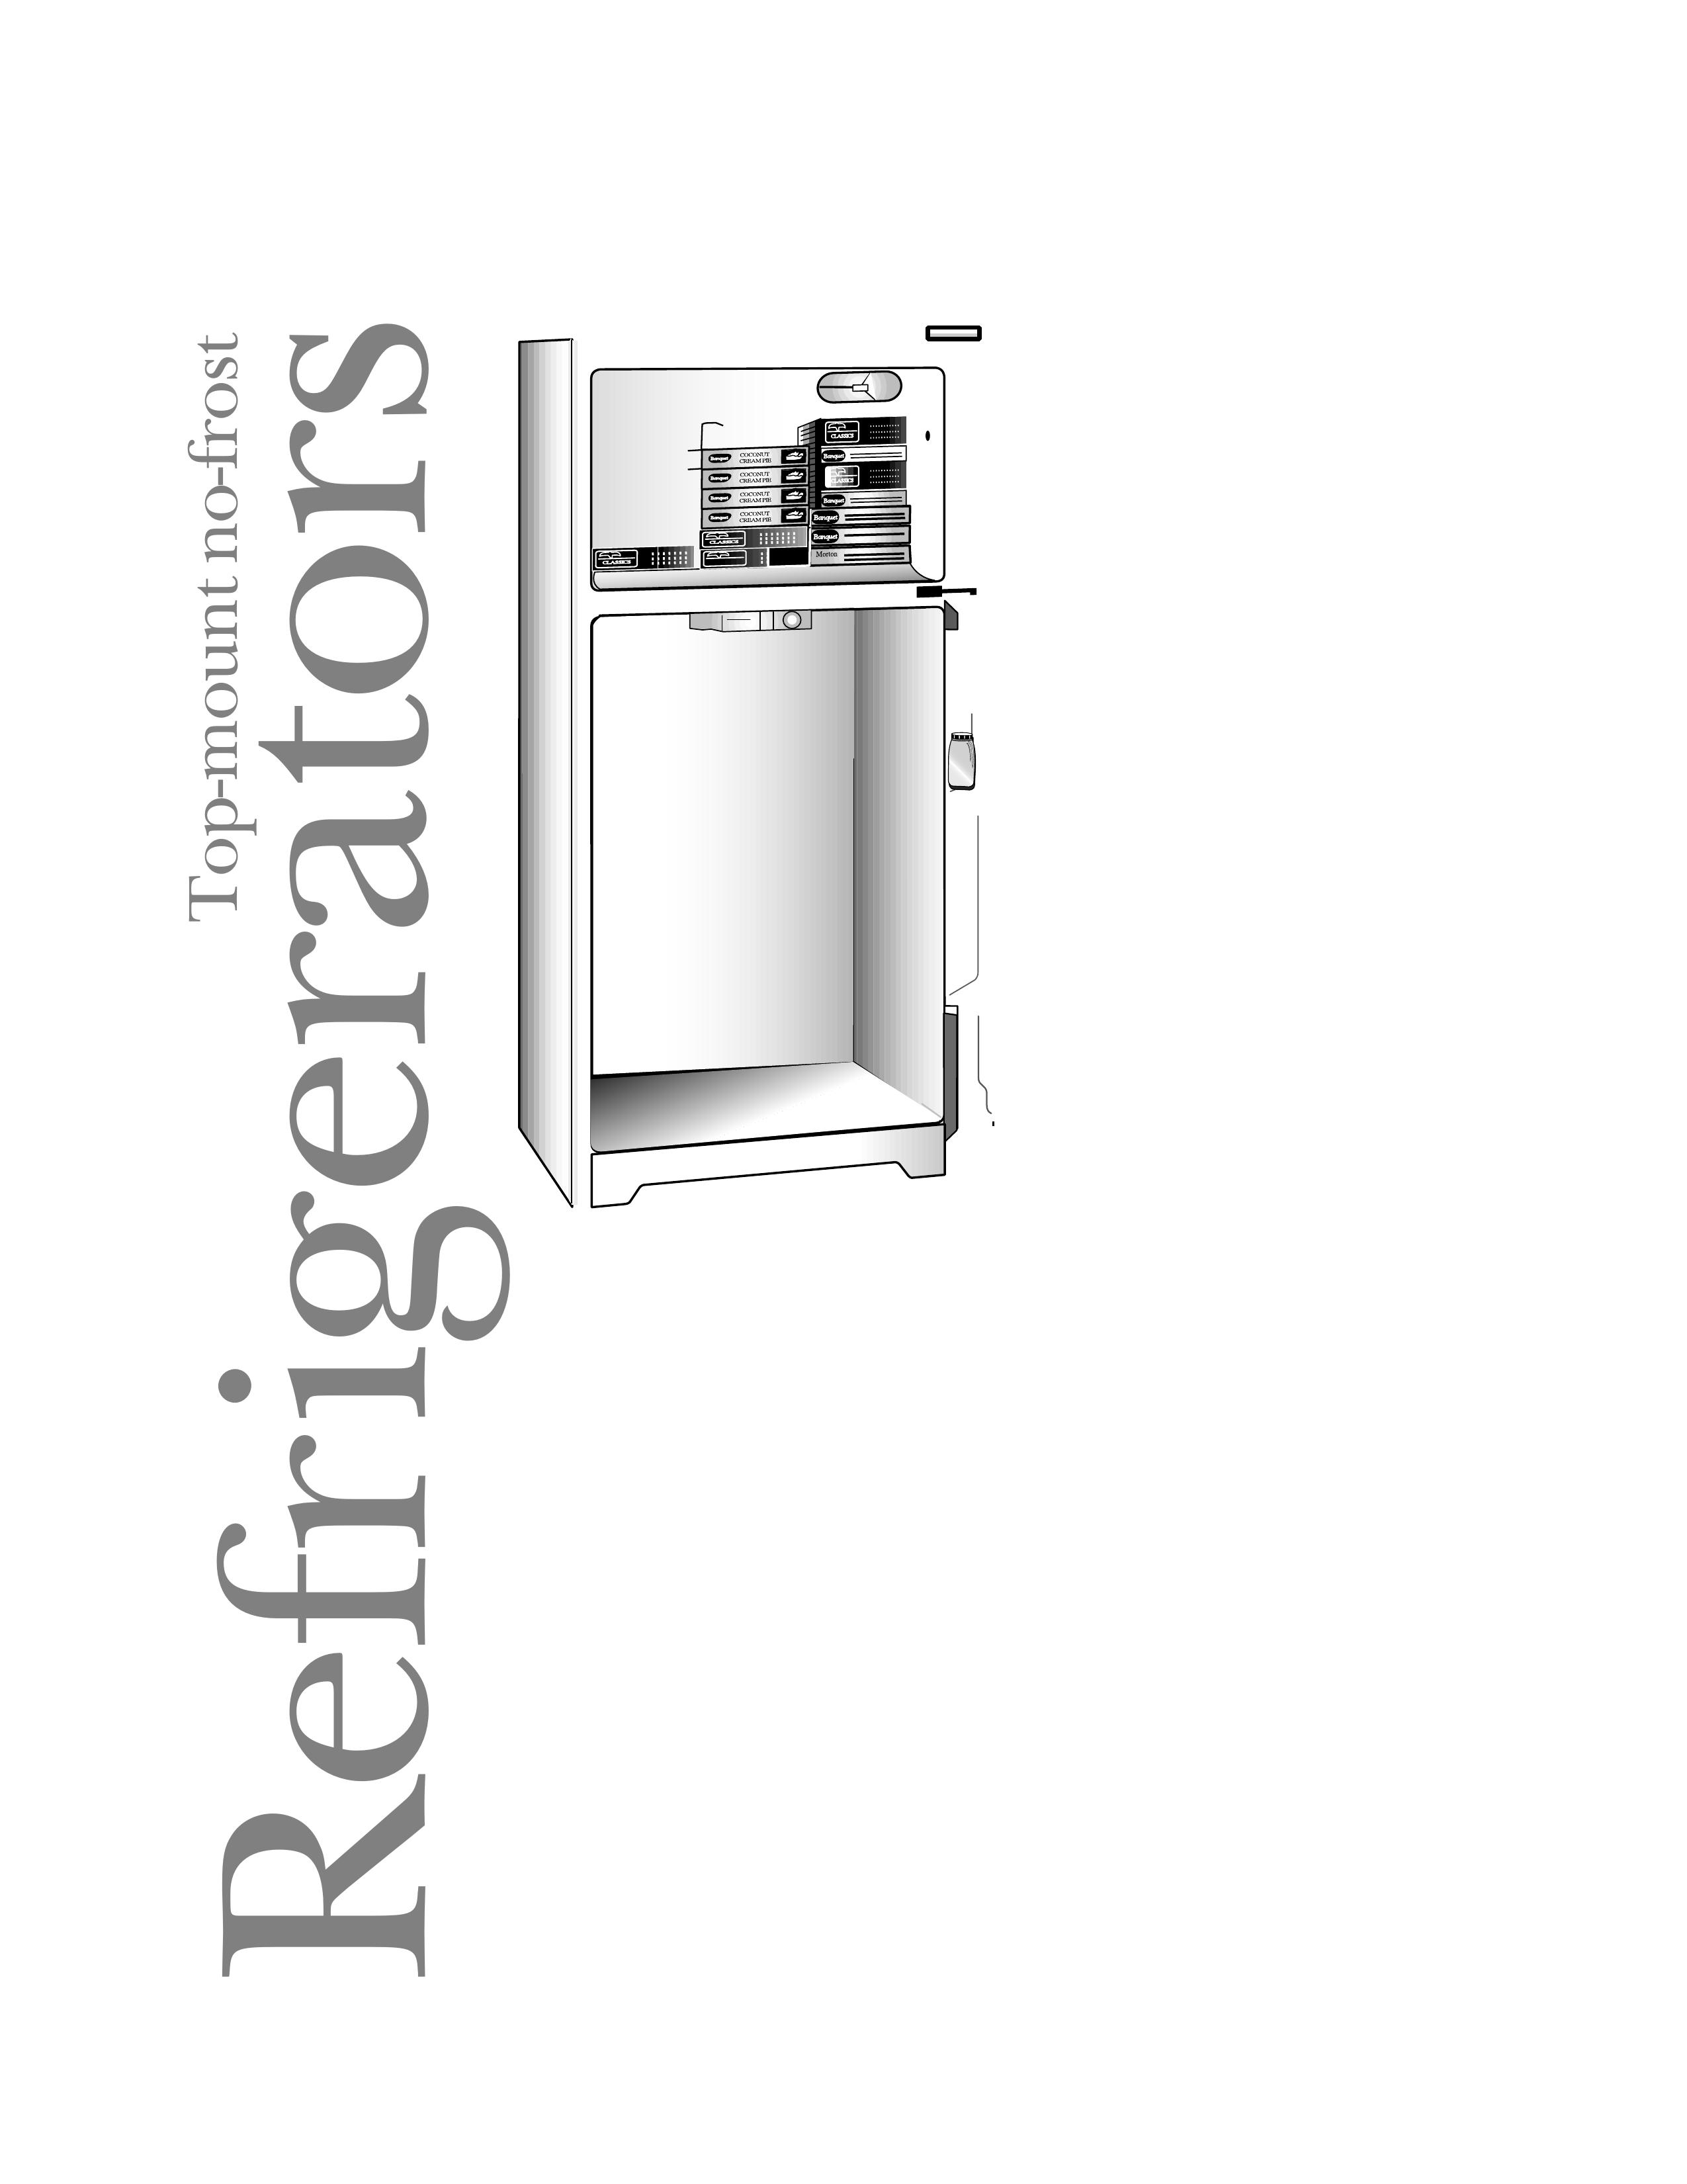 GE 14 Refrigerator User Manual